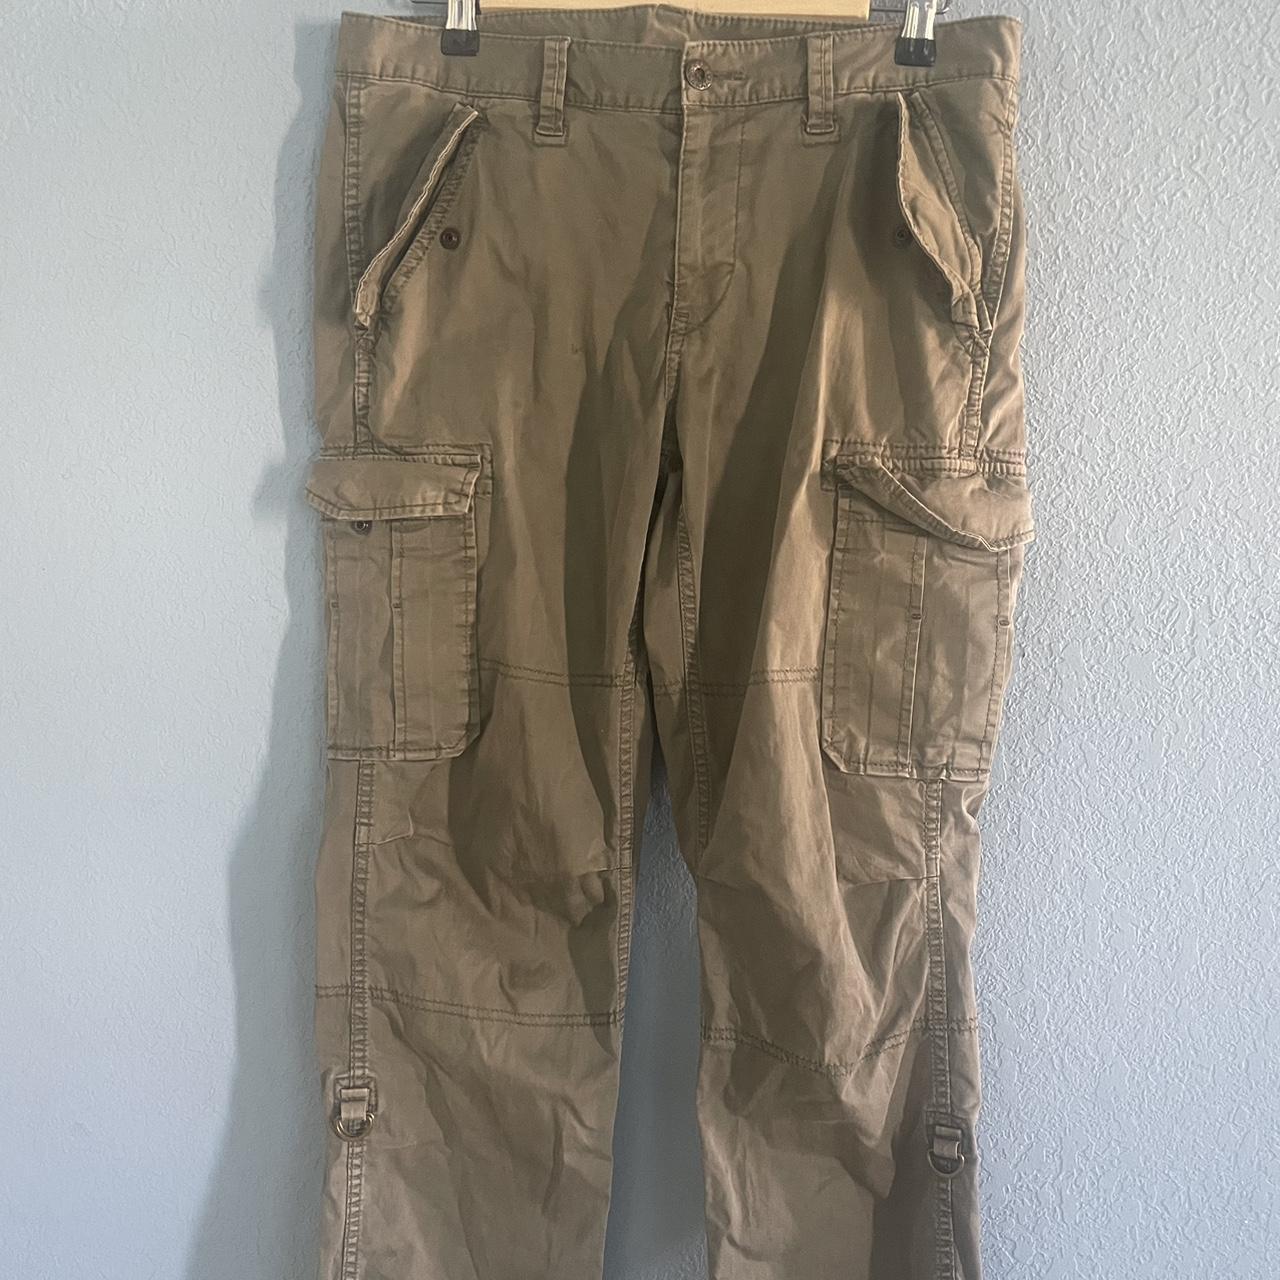 Vintage Uniqlo cargo pants size 32 Olive green... - Depop